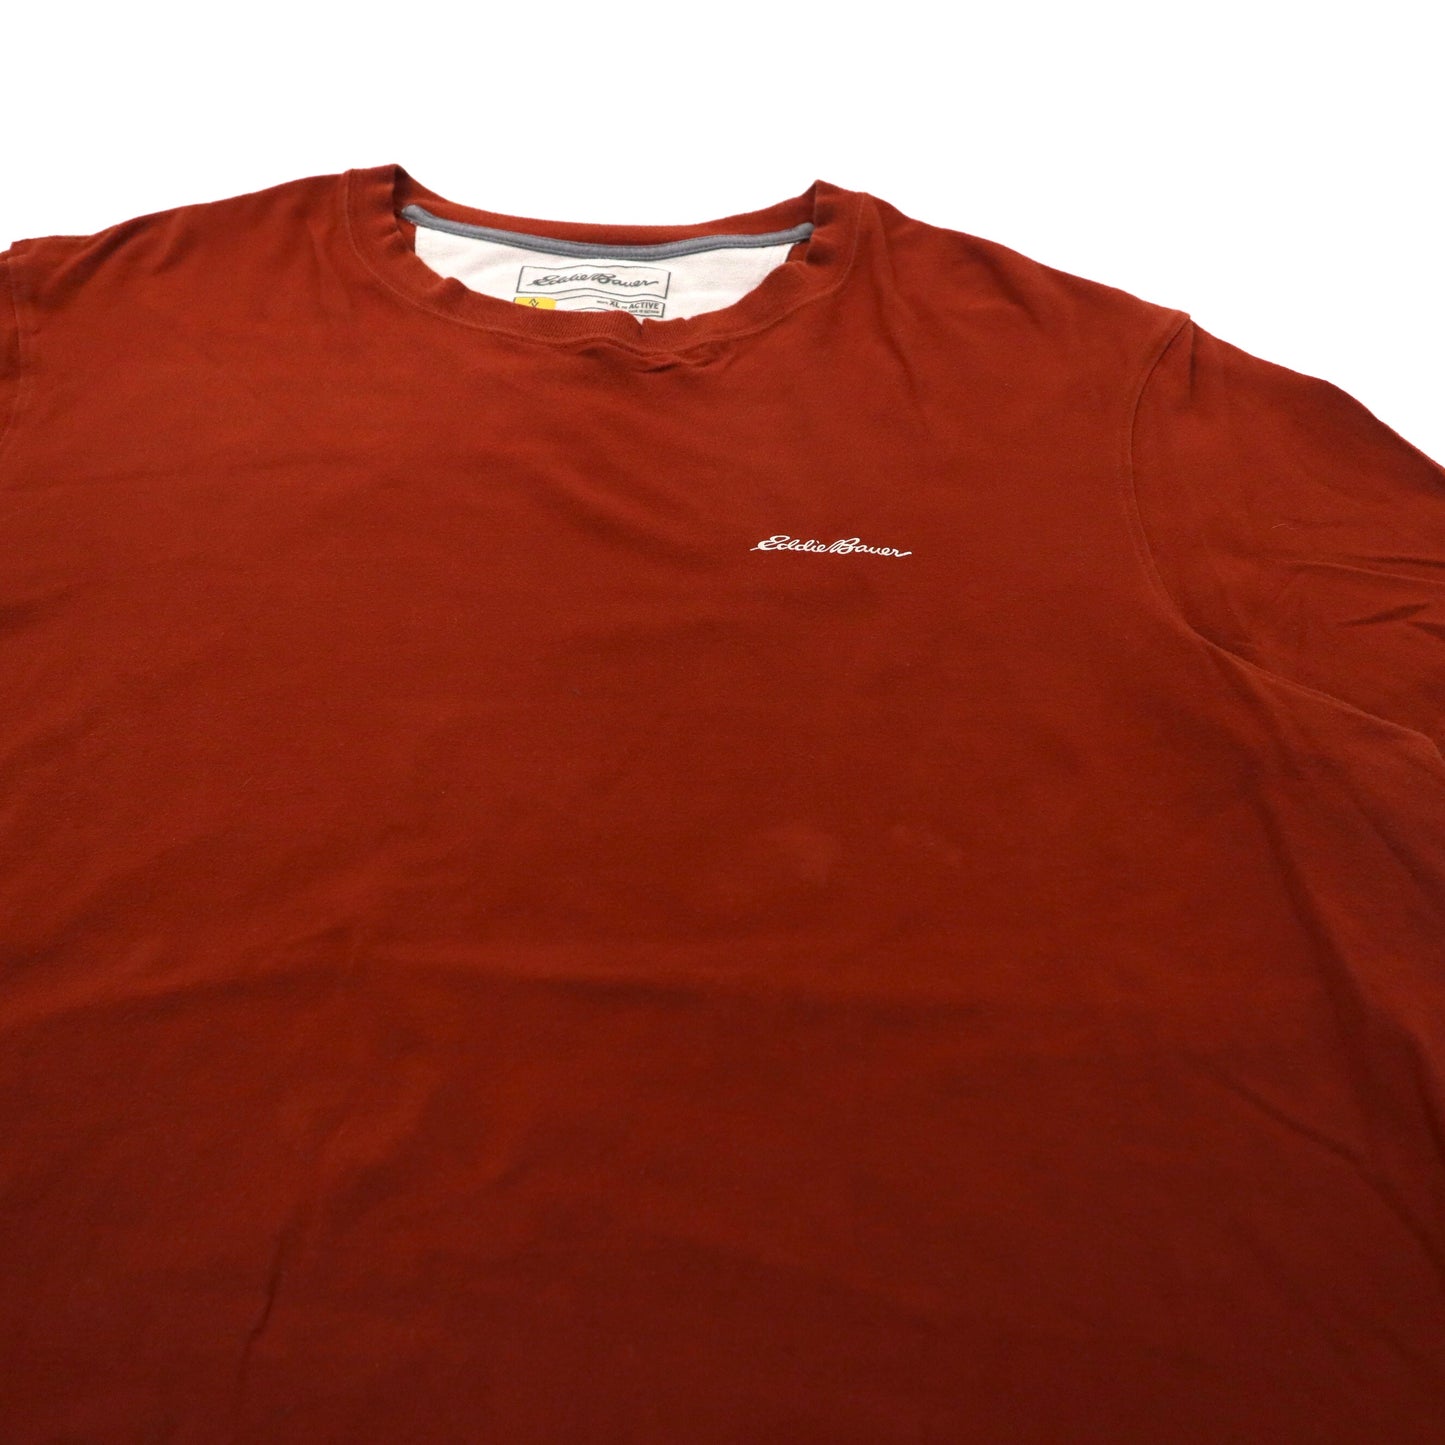 Eddie Bauer アクティブフィットTシャツ XL ブラウン コットン ストレッチ ワンポイントロゴ